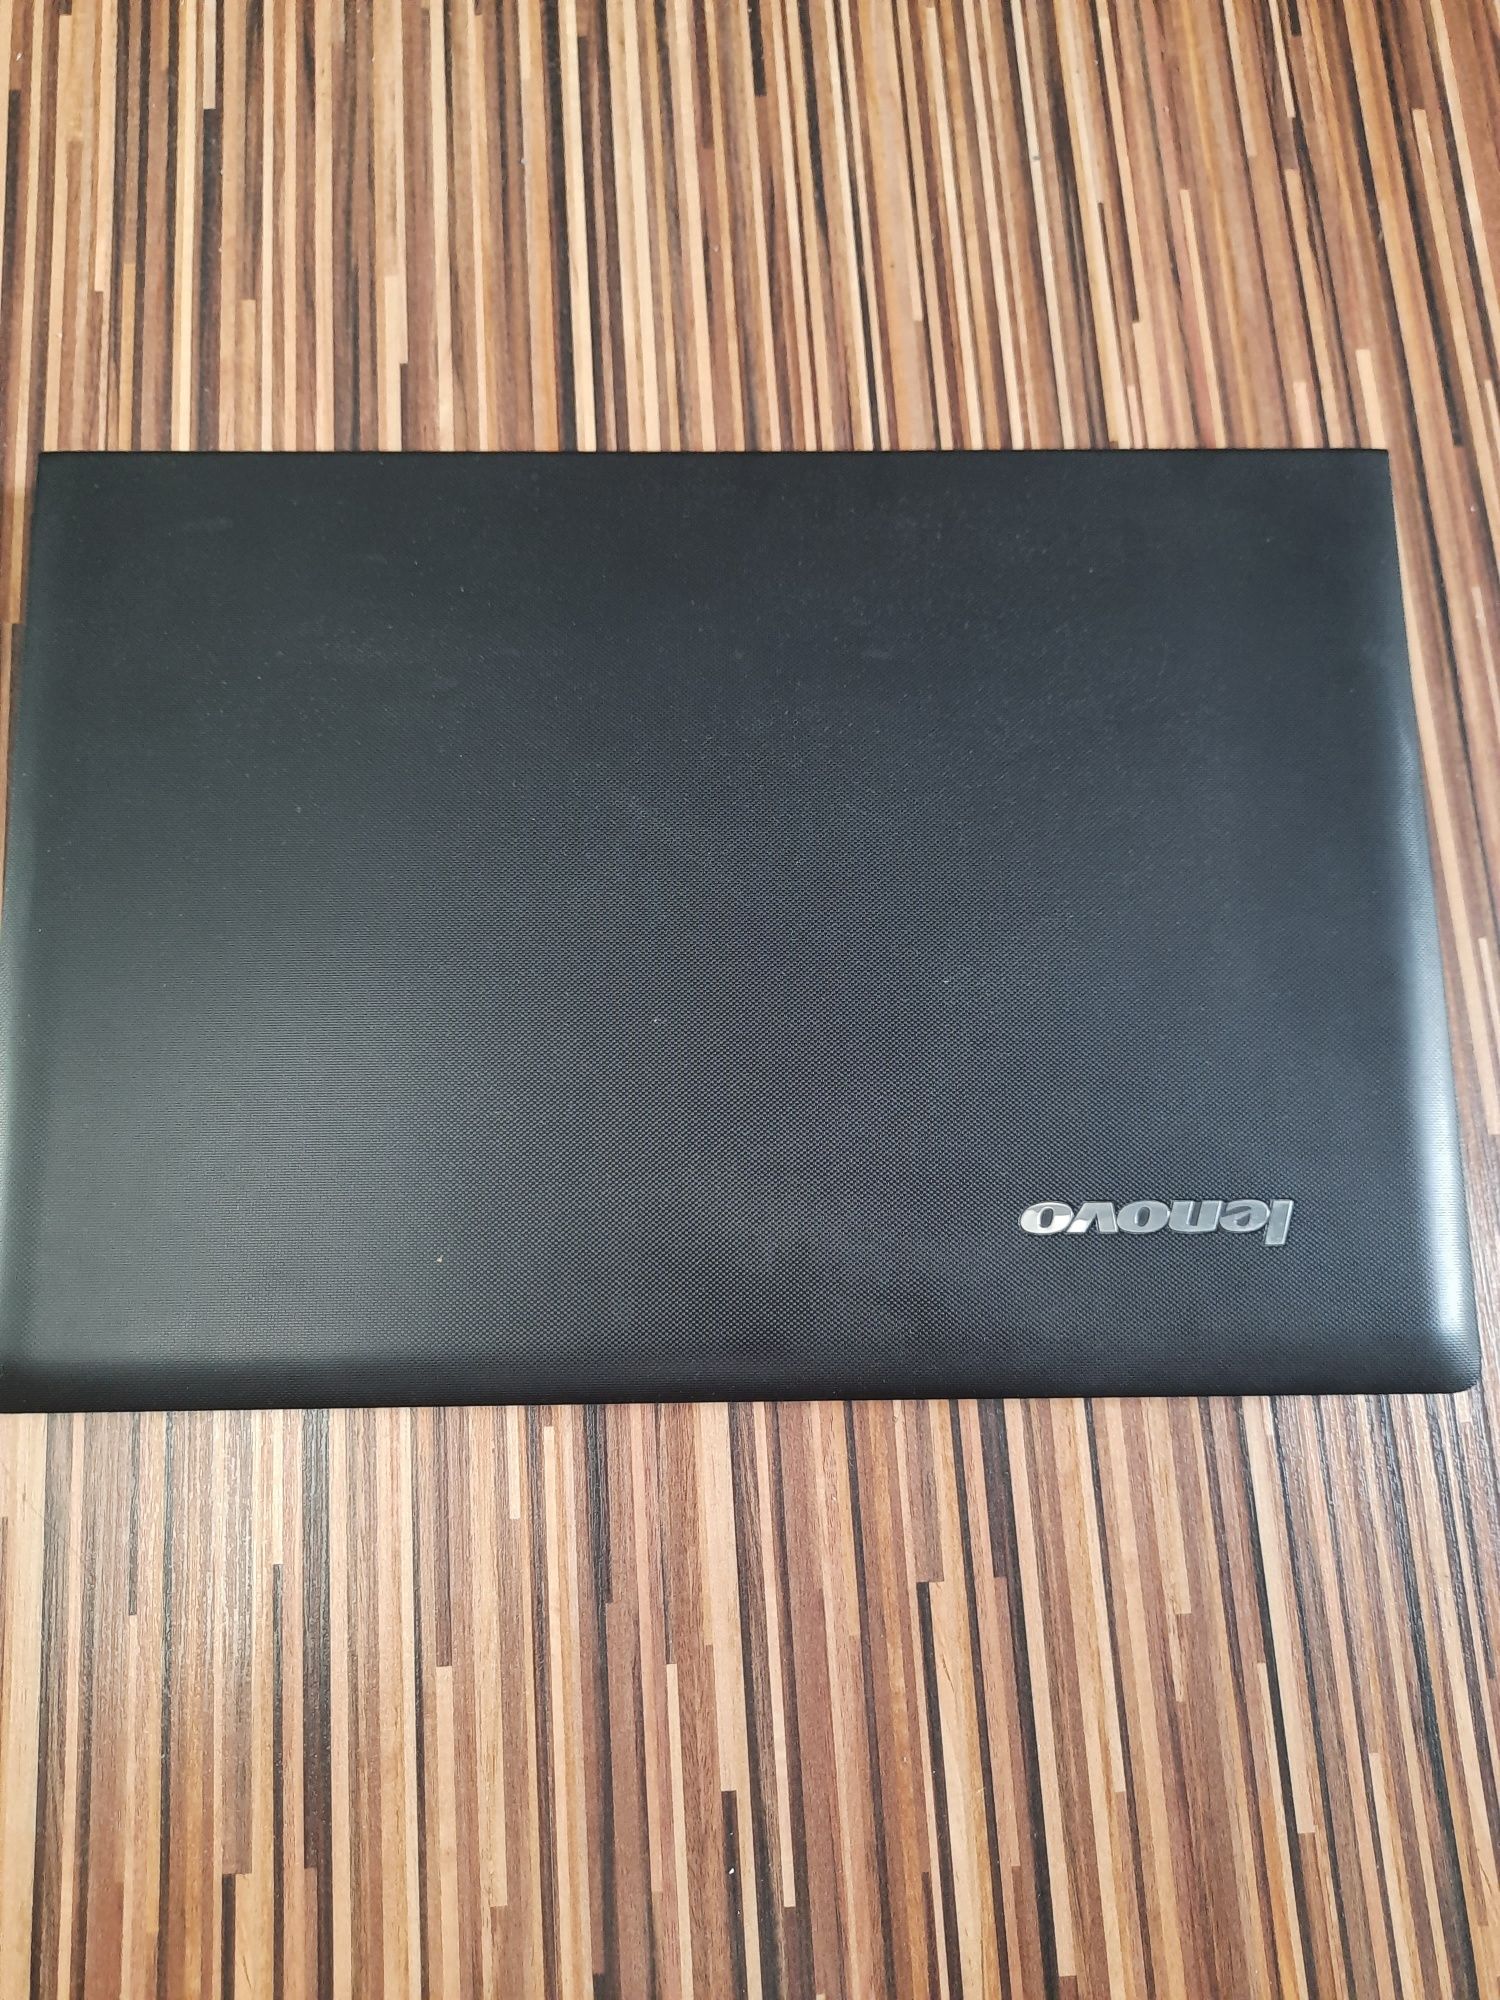 Laptop Lenovo G50-30